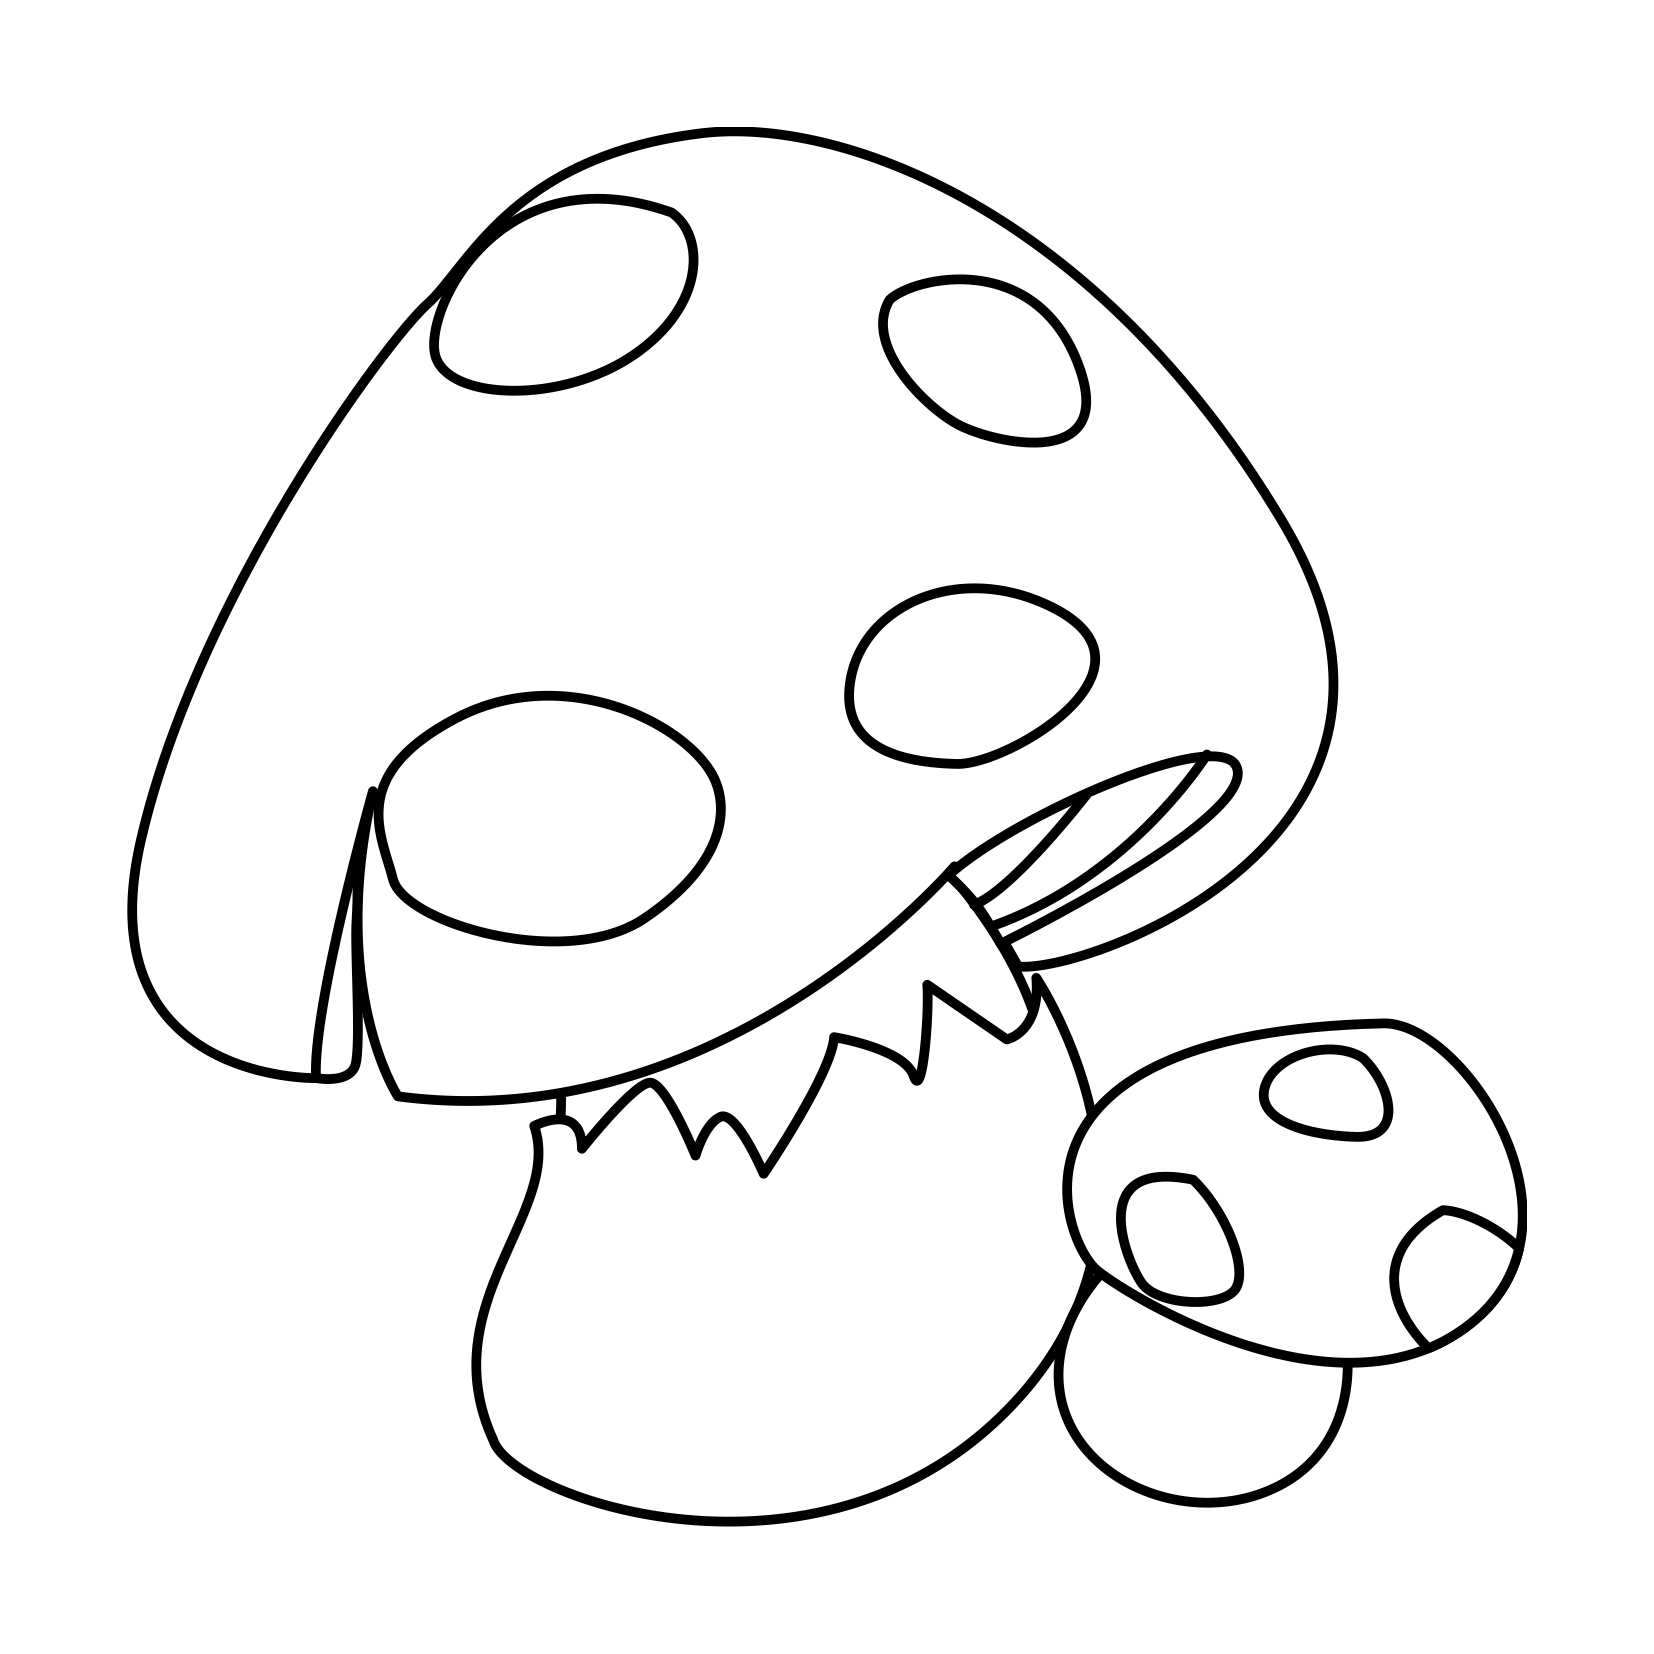 Розмальовки шаблон гриба шаблон гриба, контур для вирізання з паперу